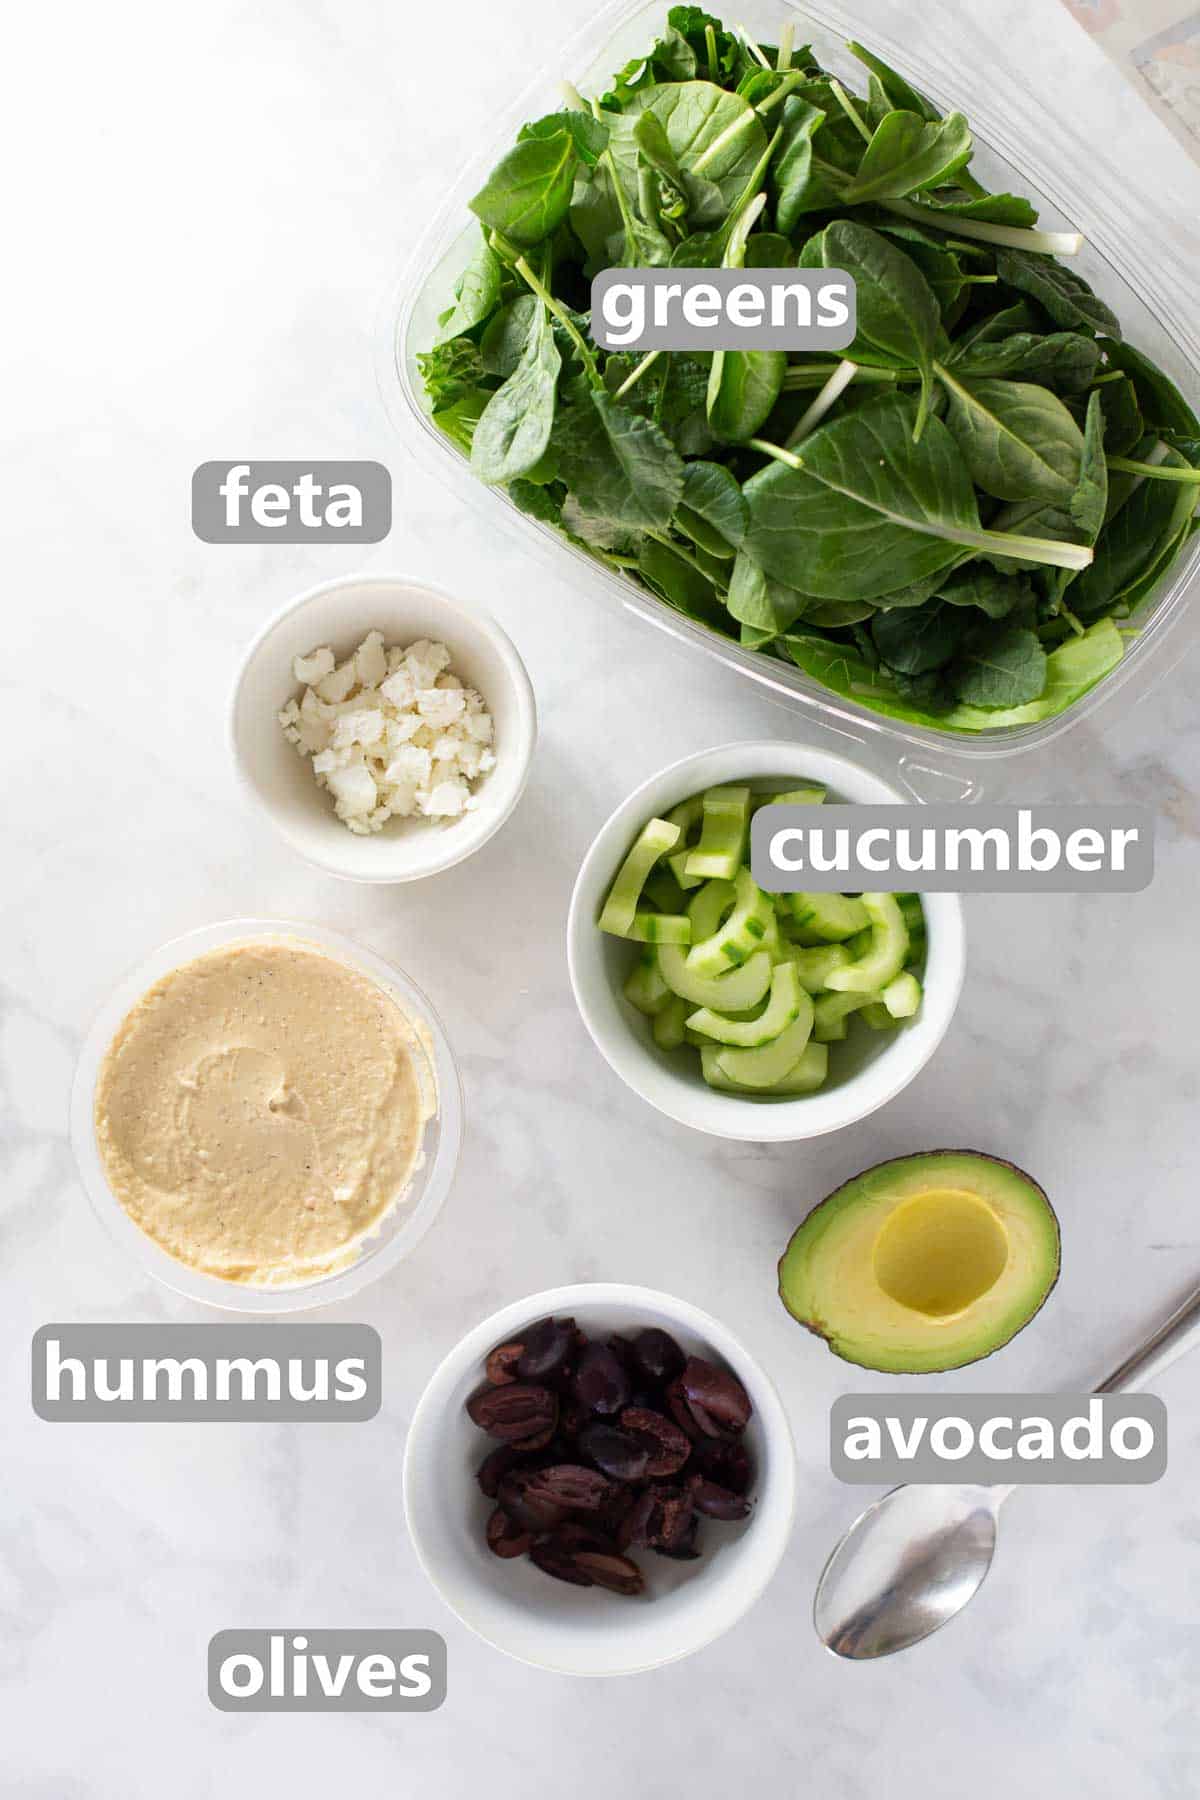 titled image showing ingredients to make a hummus veggie wrap